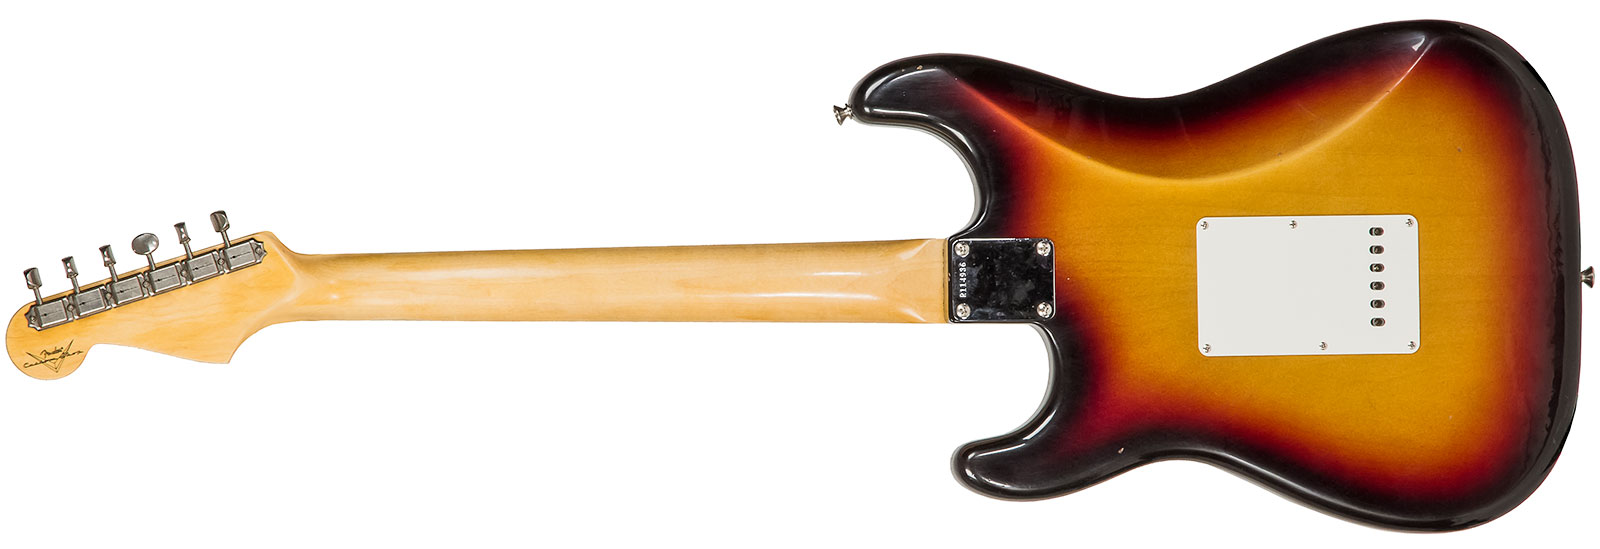 Fender Custom Shop Strat 1964 Rw #r114936 - Journeyman Relic 3-color Sunburst - E-Gitarre in Str-Form - Variation 1